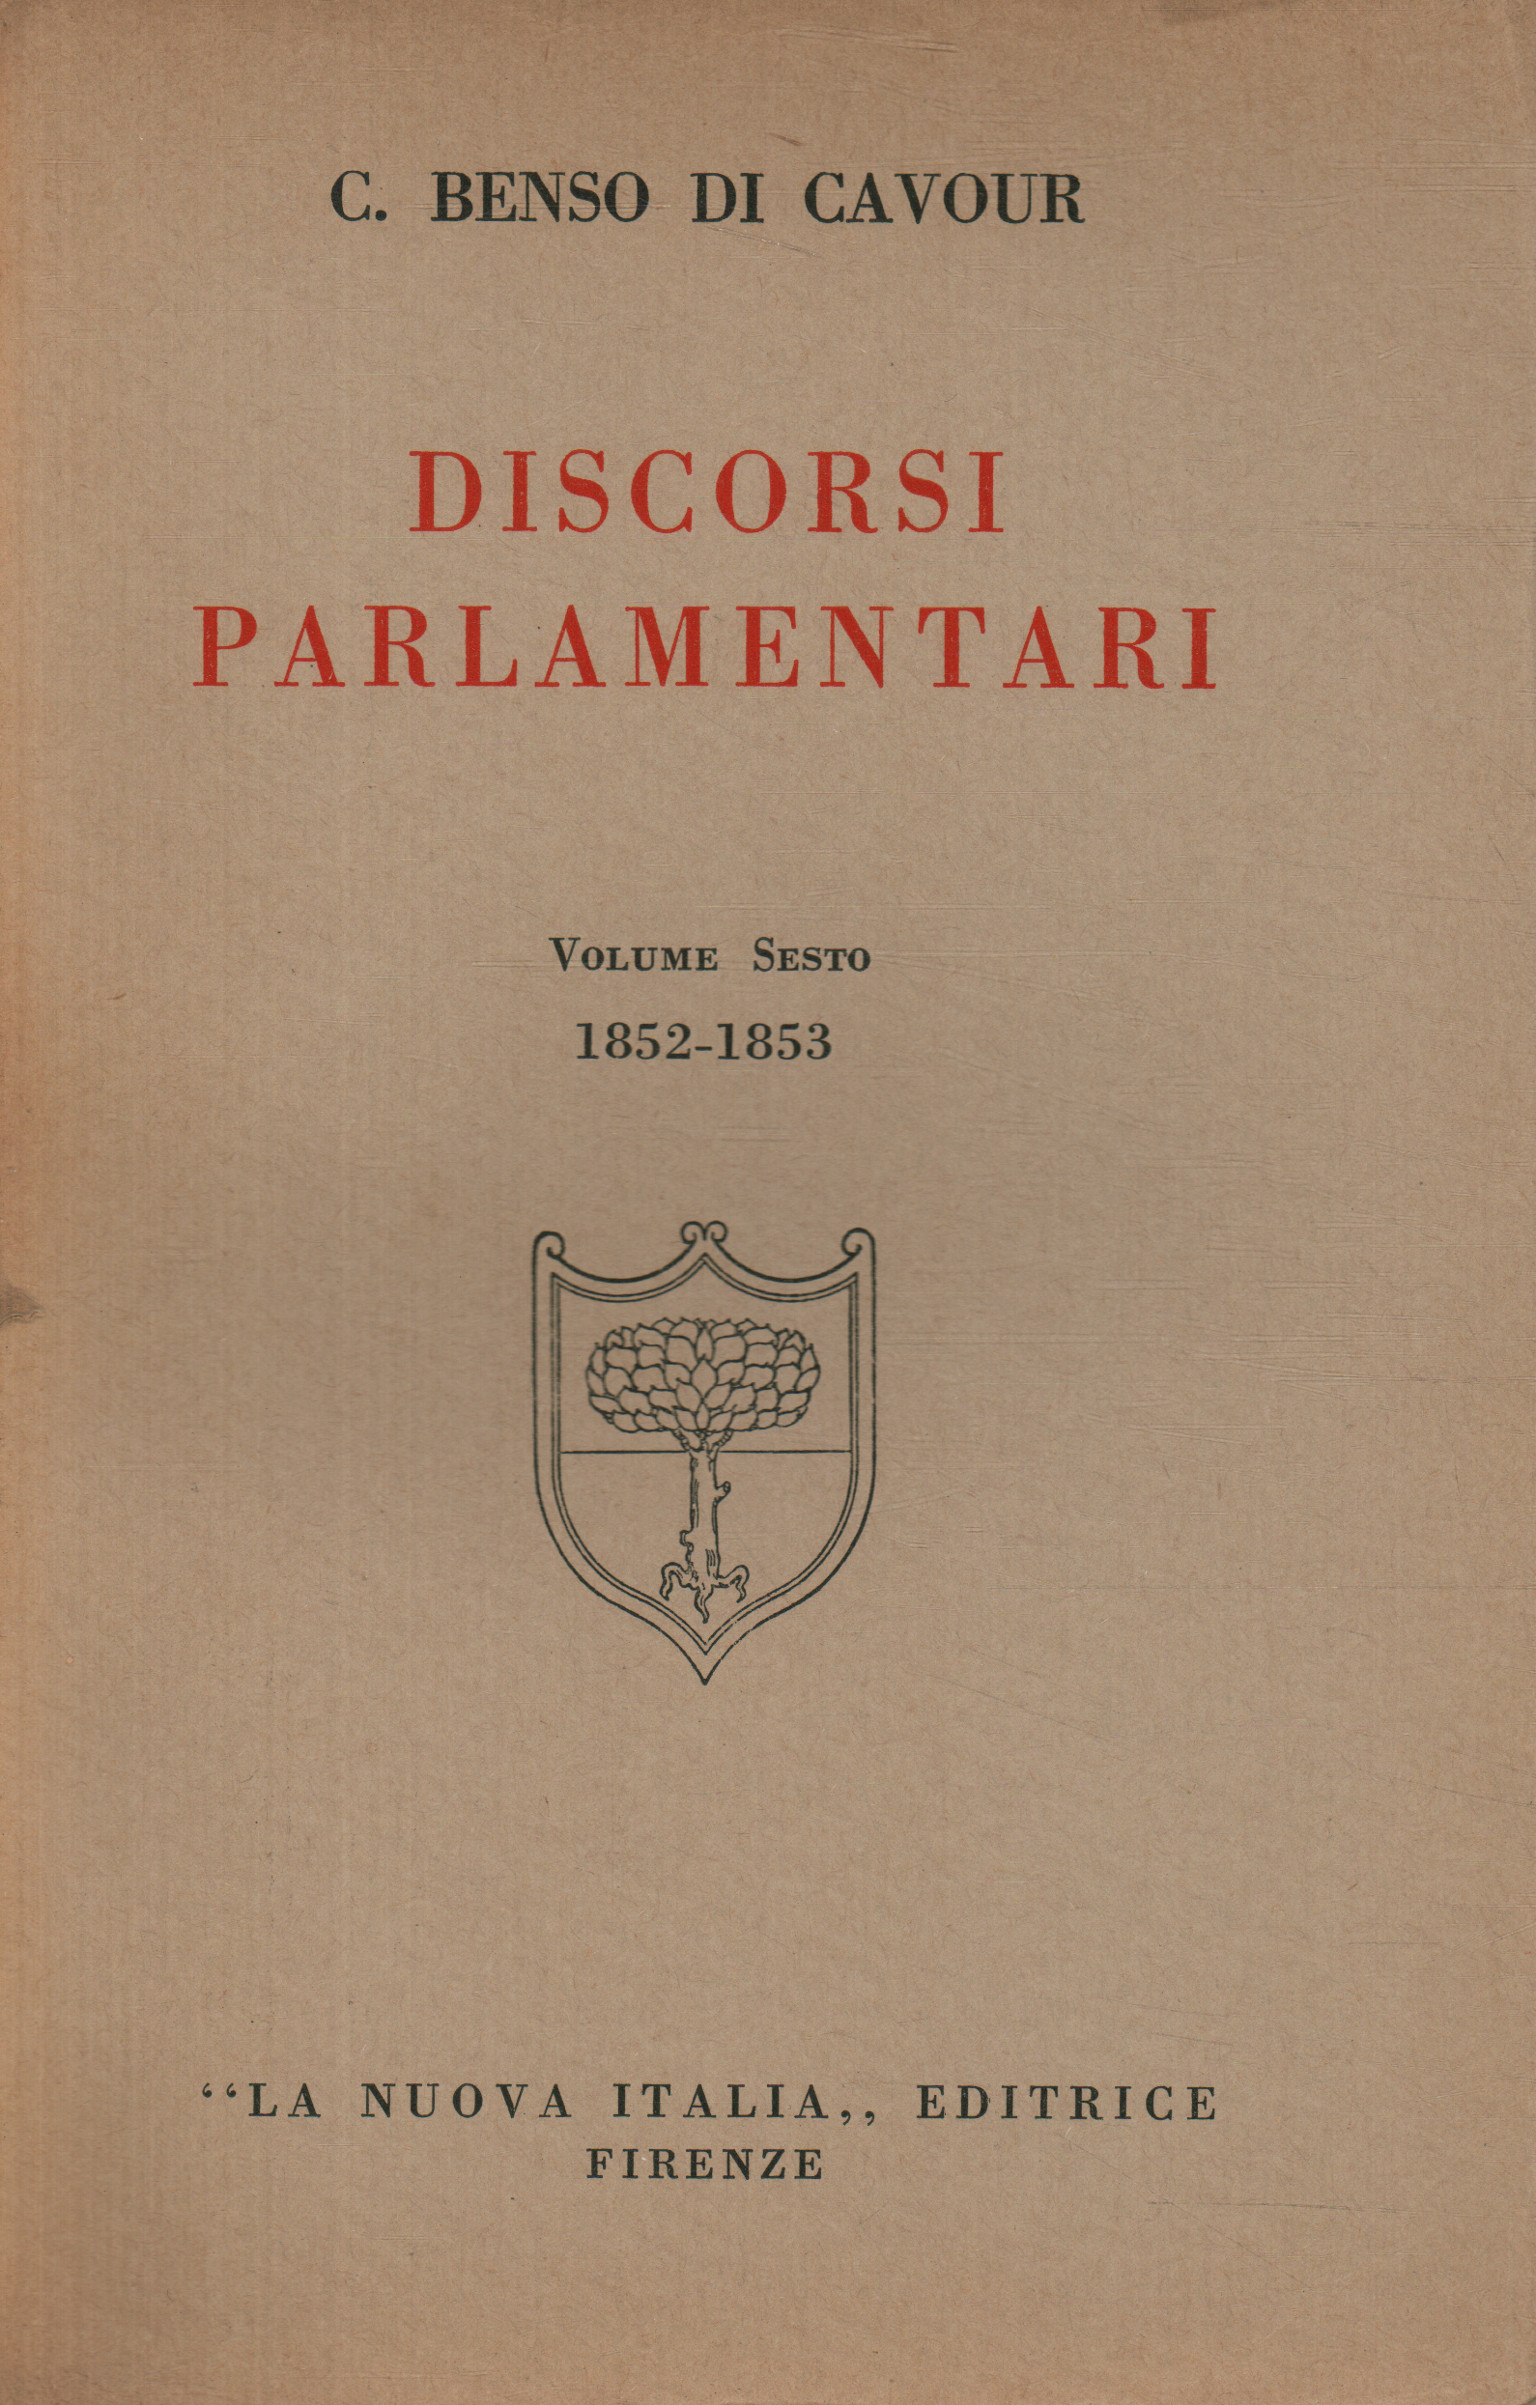 Parliamentary speeches. 1852-1853 (Volume V